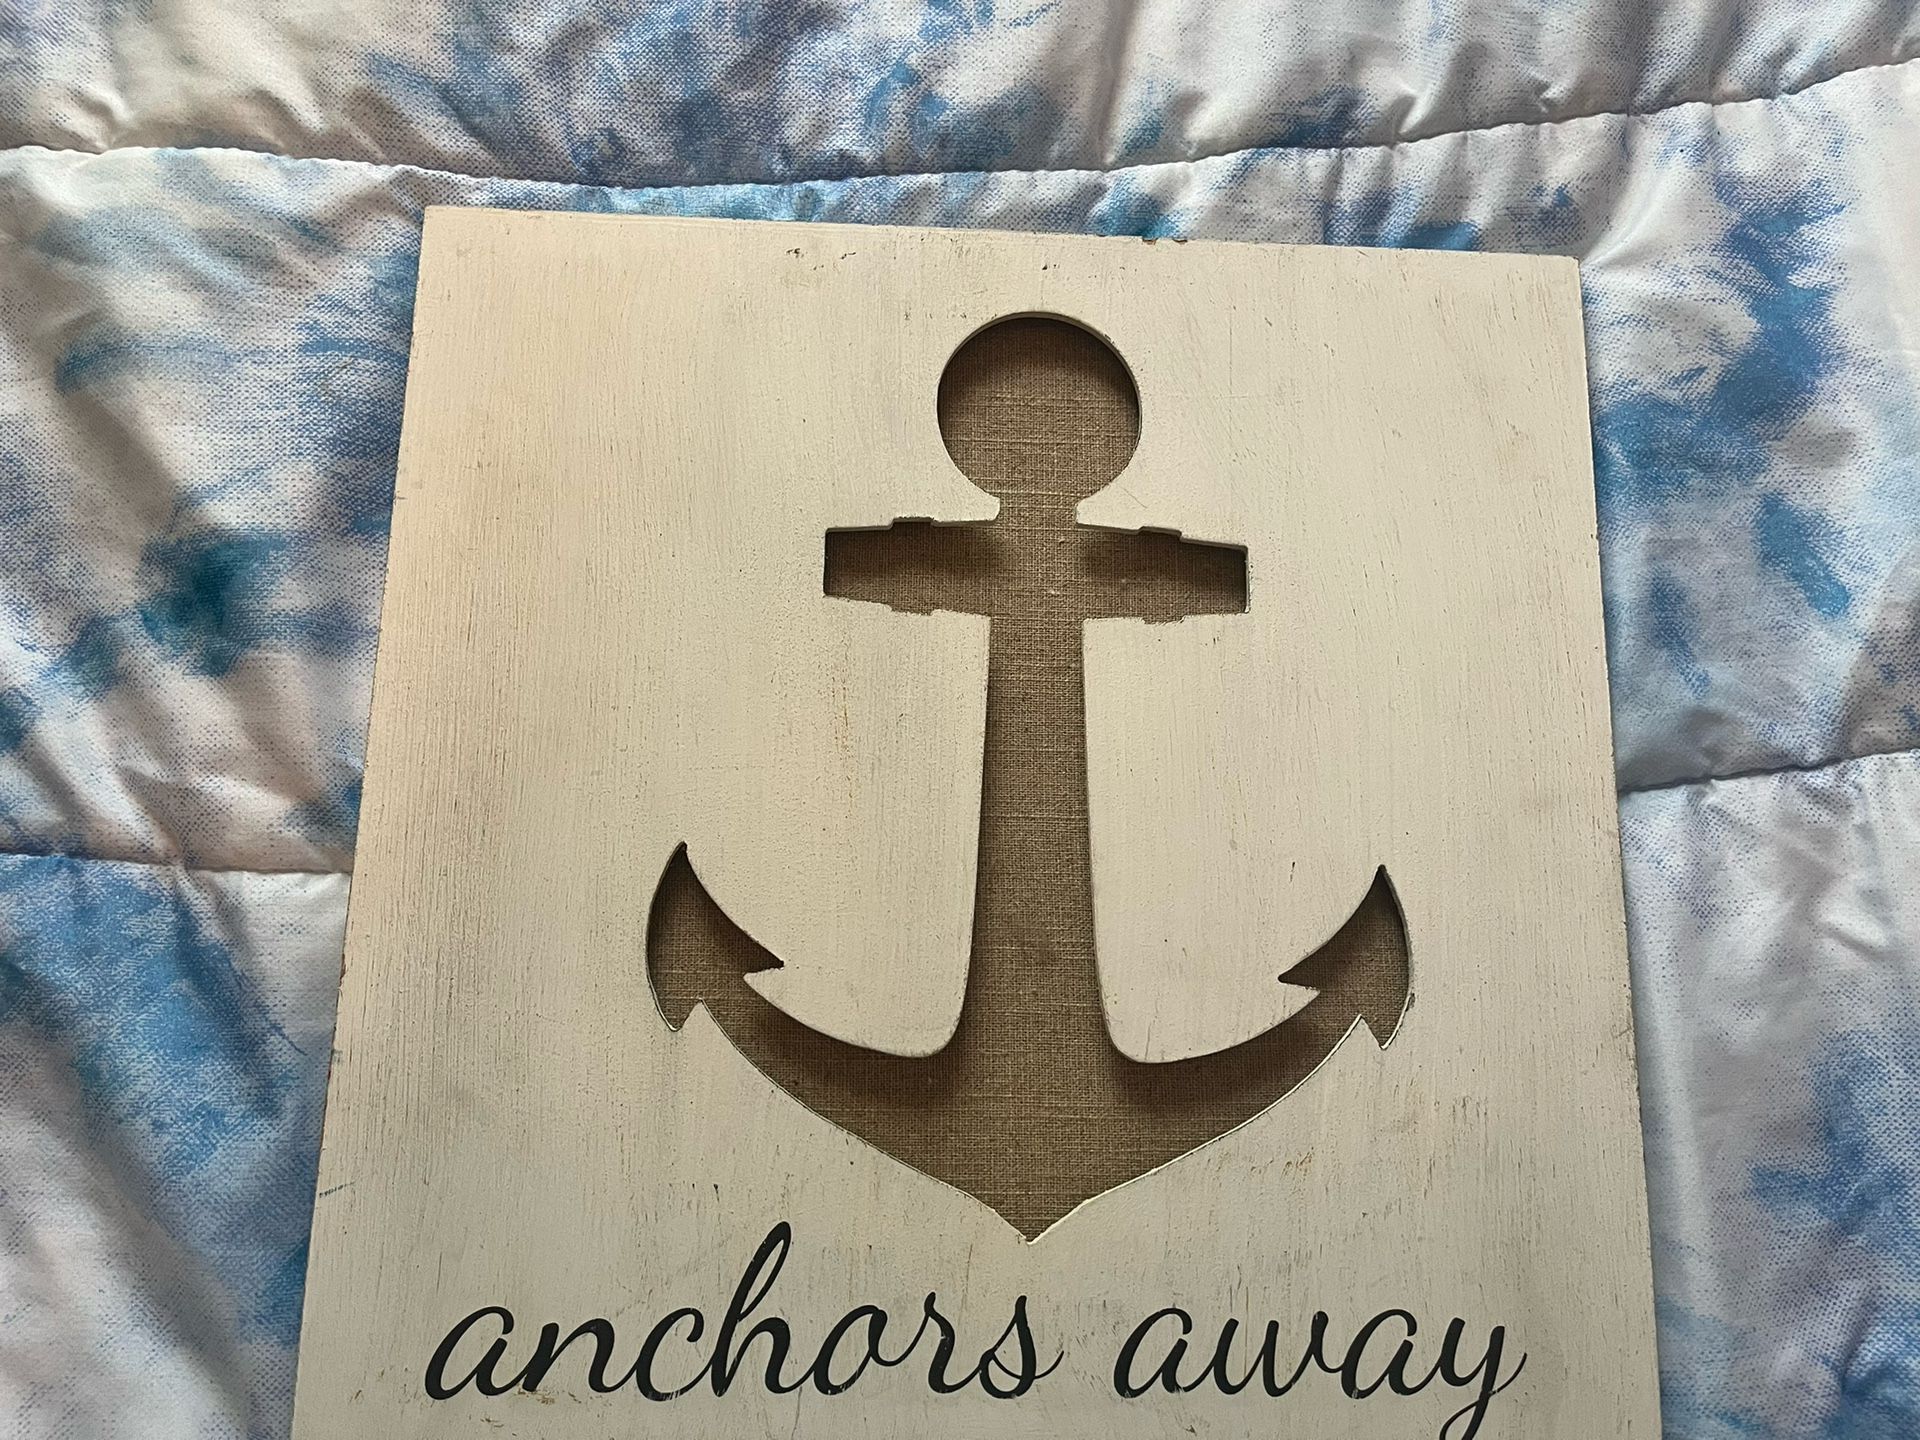 Rustic Anchors away Hanging Sign 